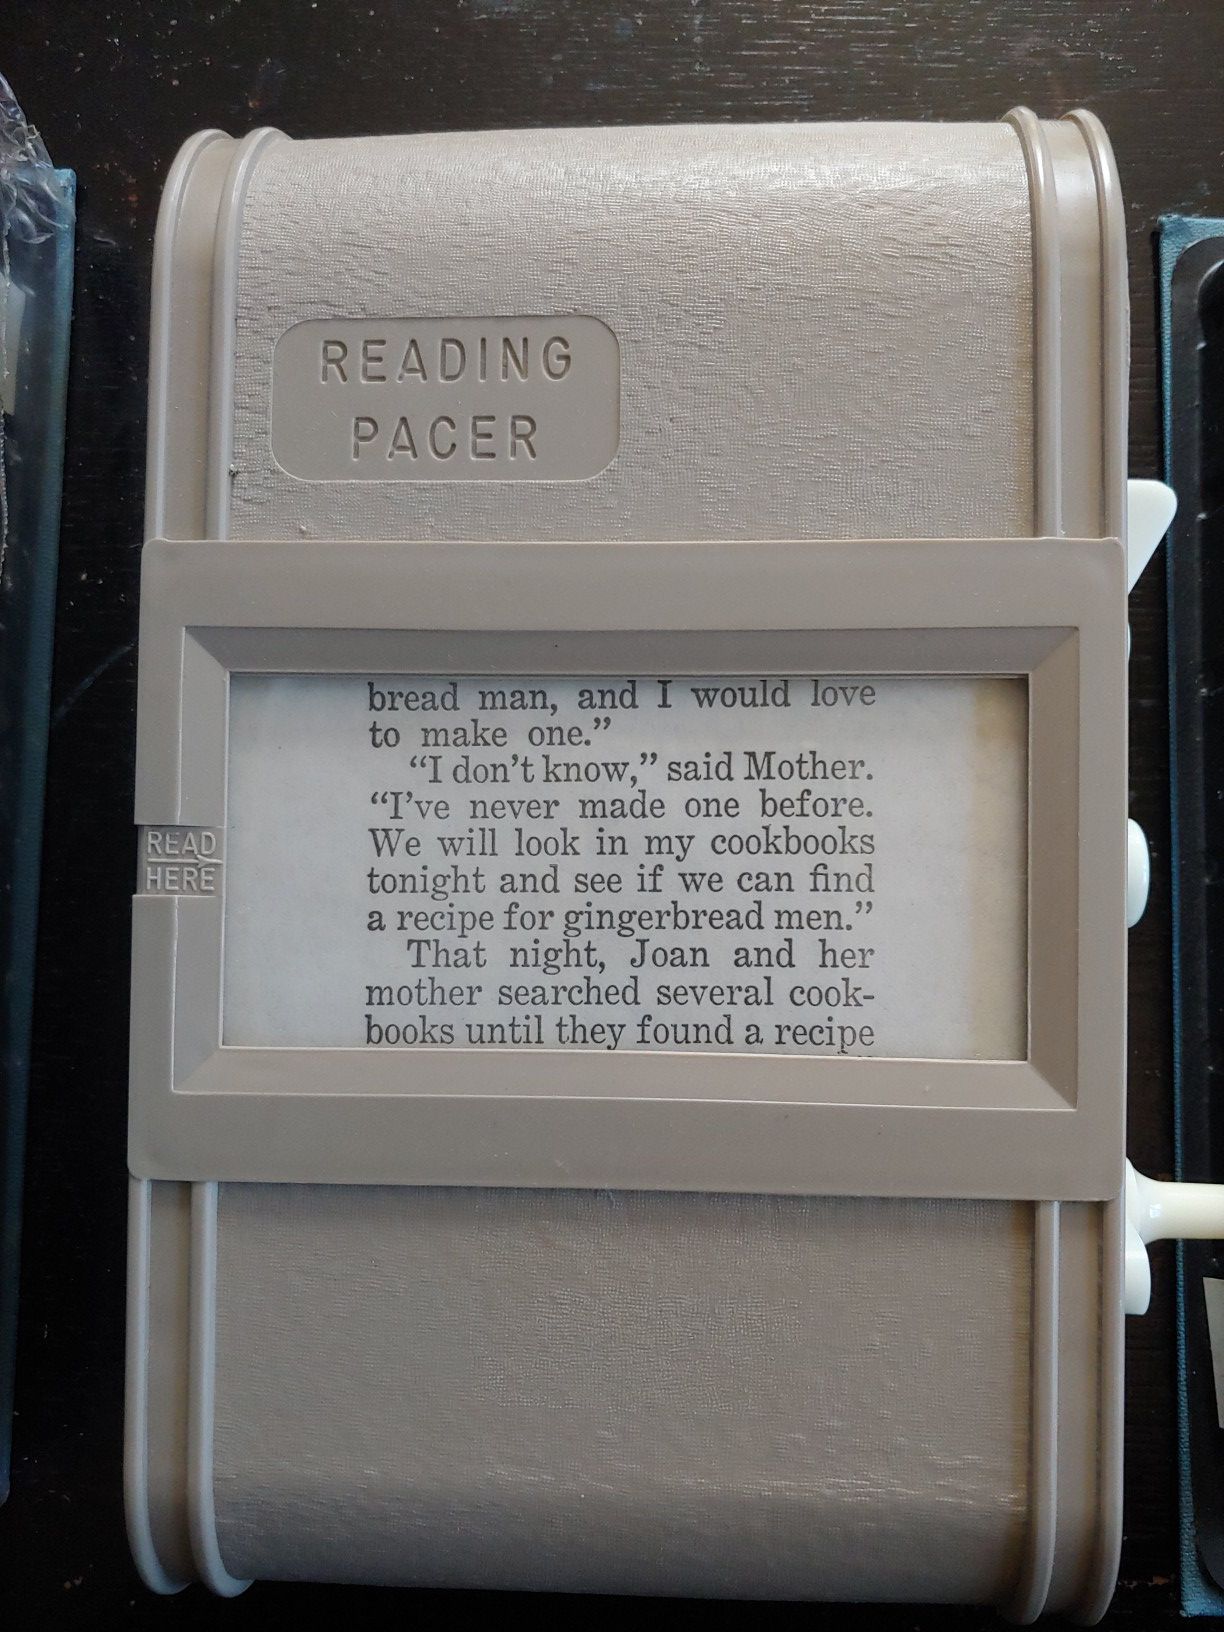 Reading pacer machine